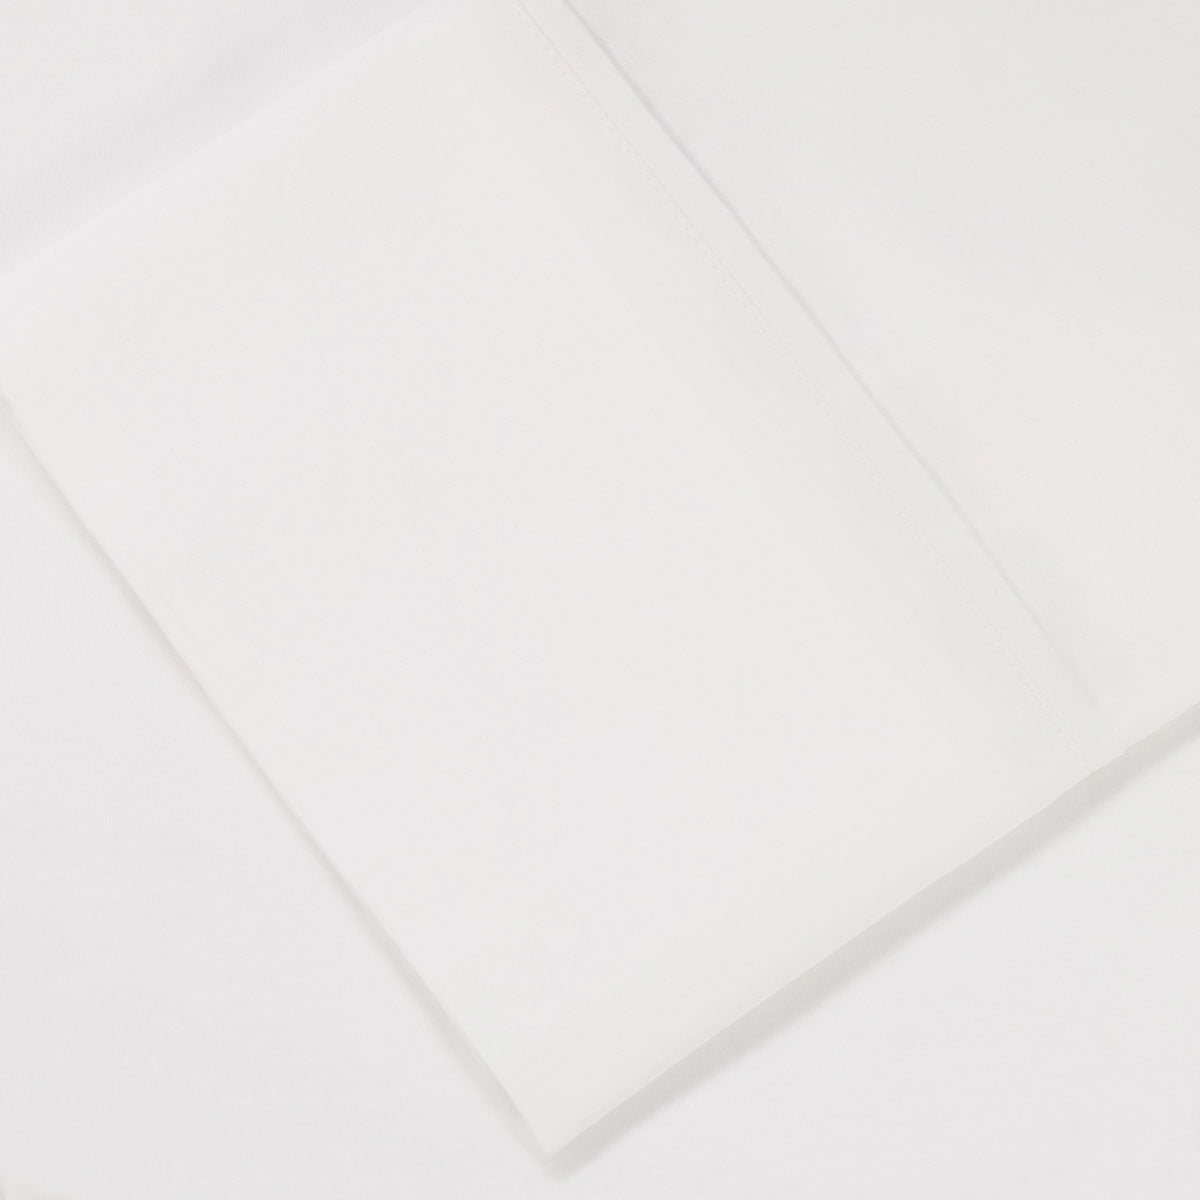 Solid Cotton Percale 2-Piece Pillowcase Set - White